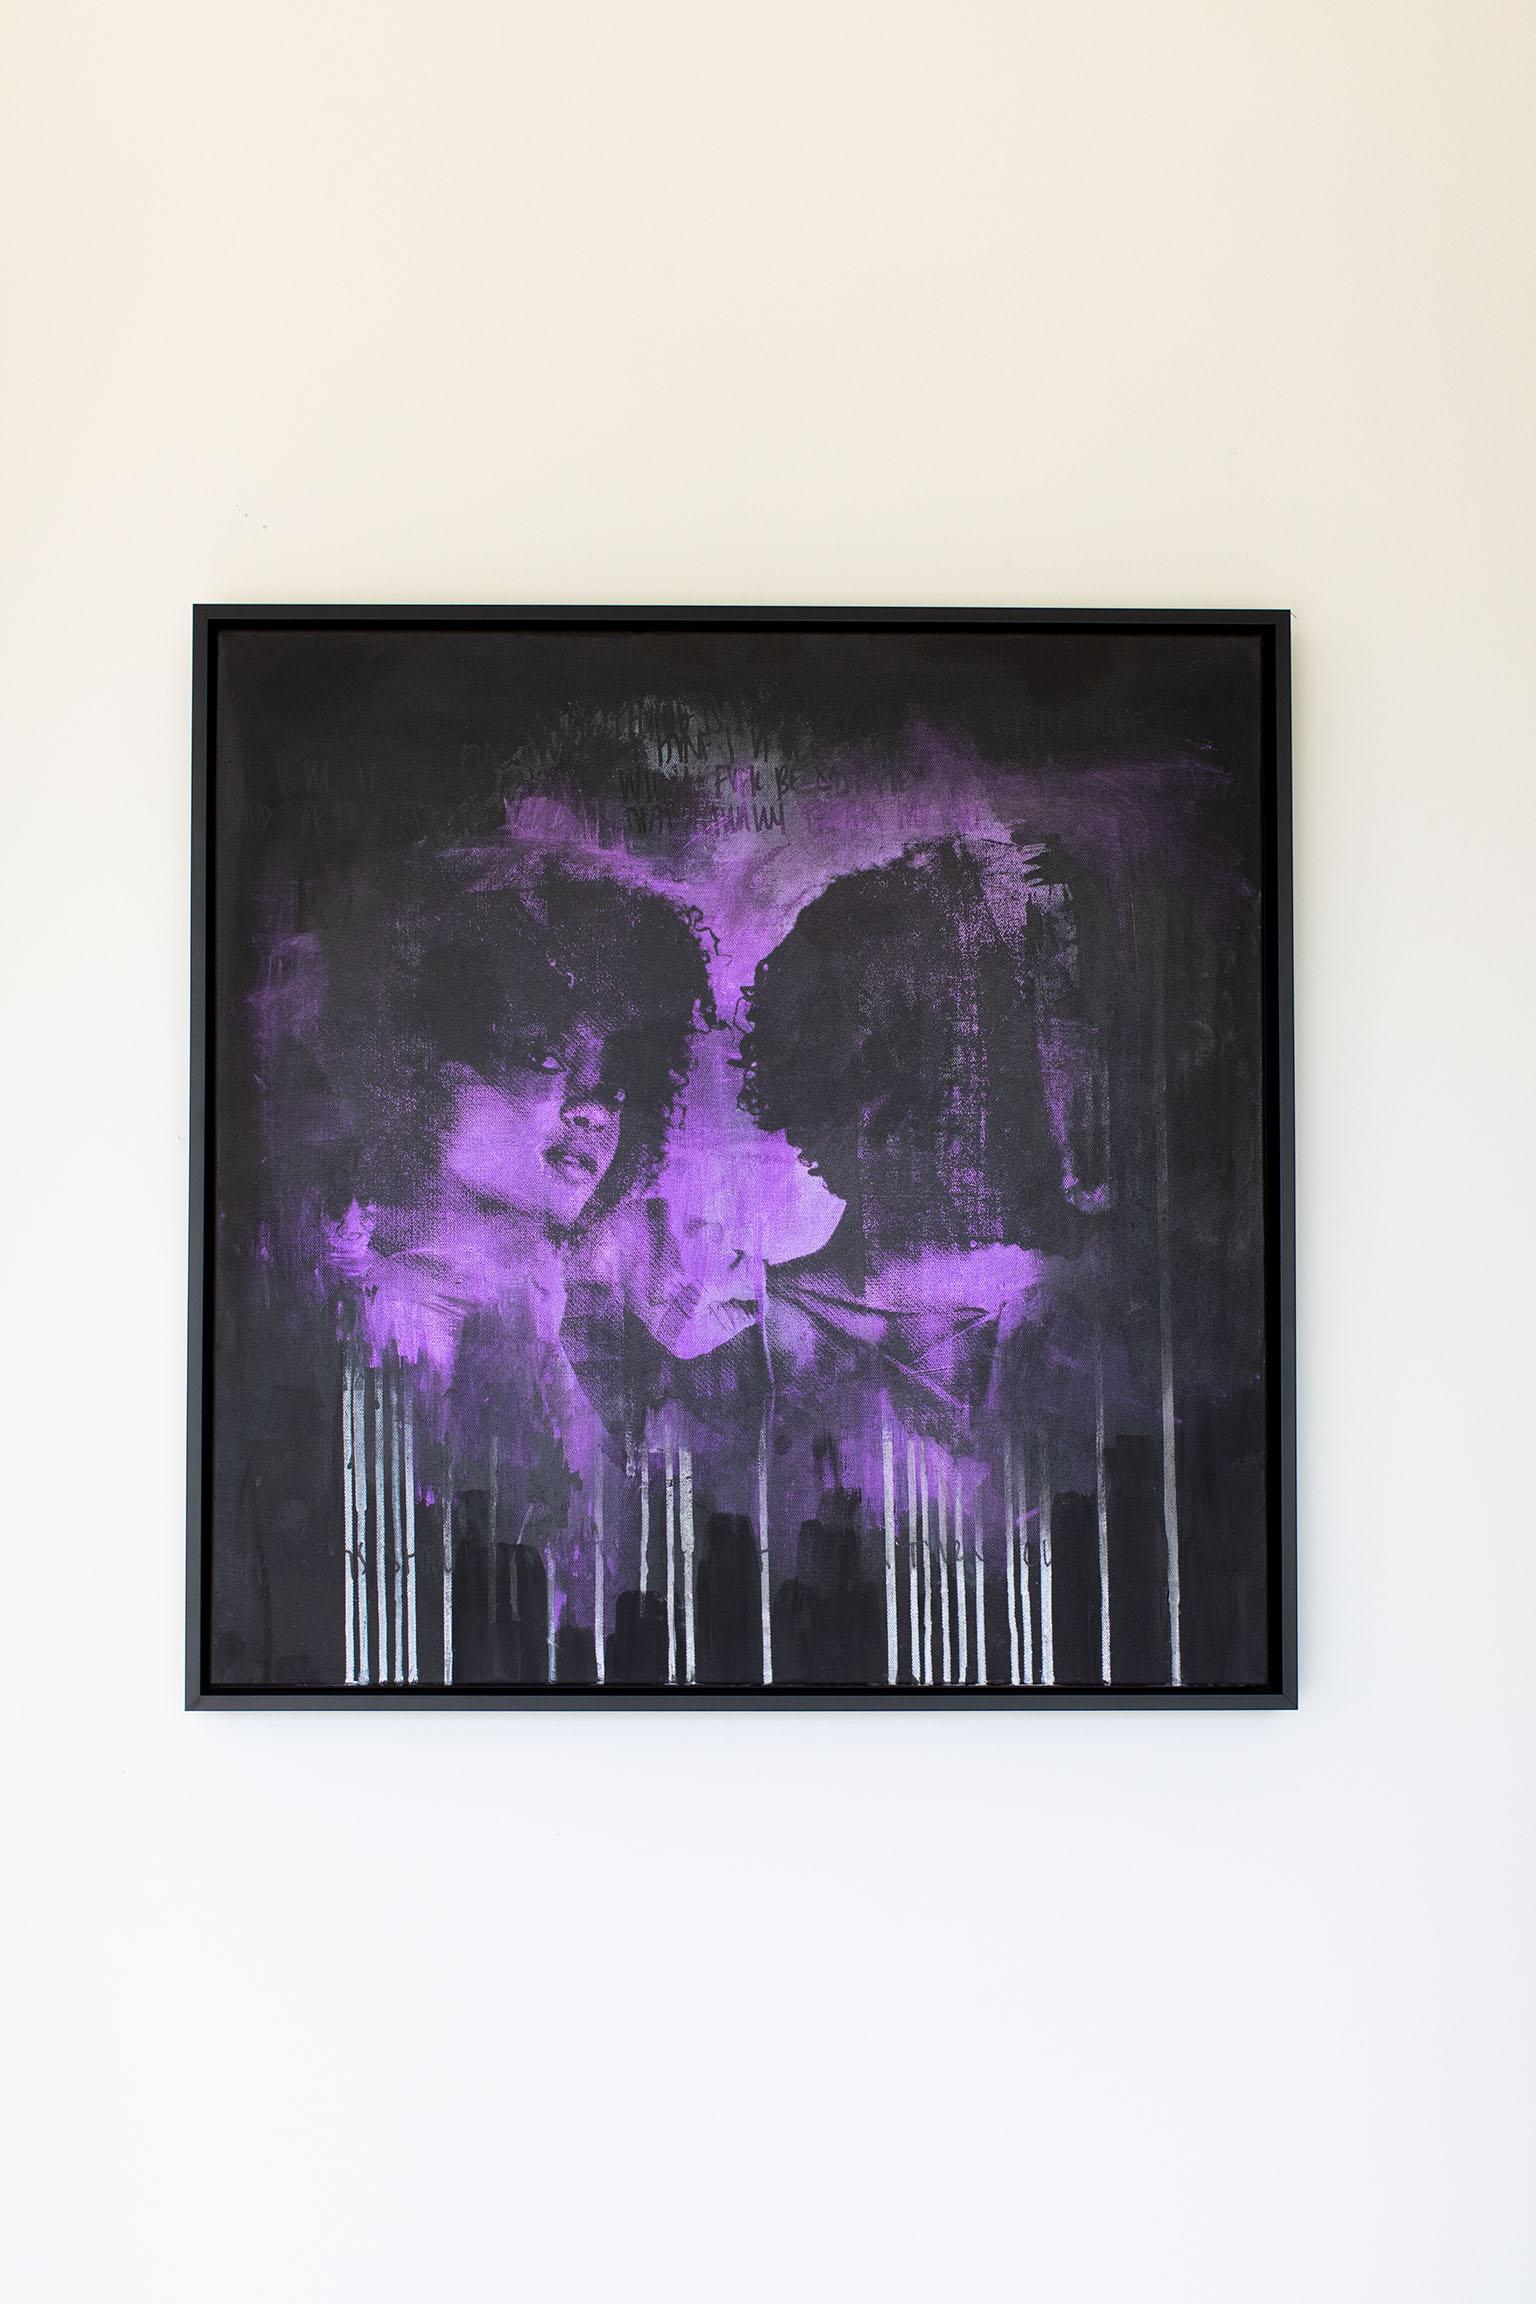 Black and Purple Painting, Mixed Media Art, Modern Art-Raining Purple

A B O U T T H I S P I E C E:
